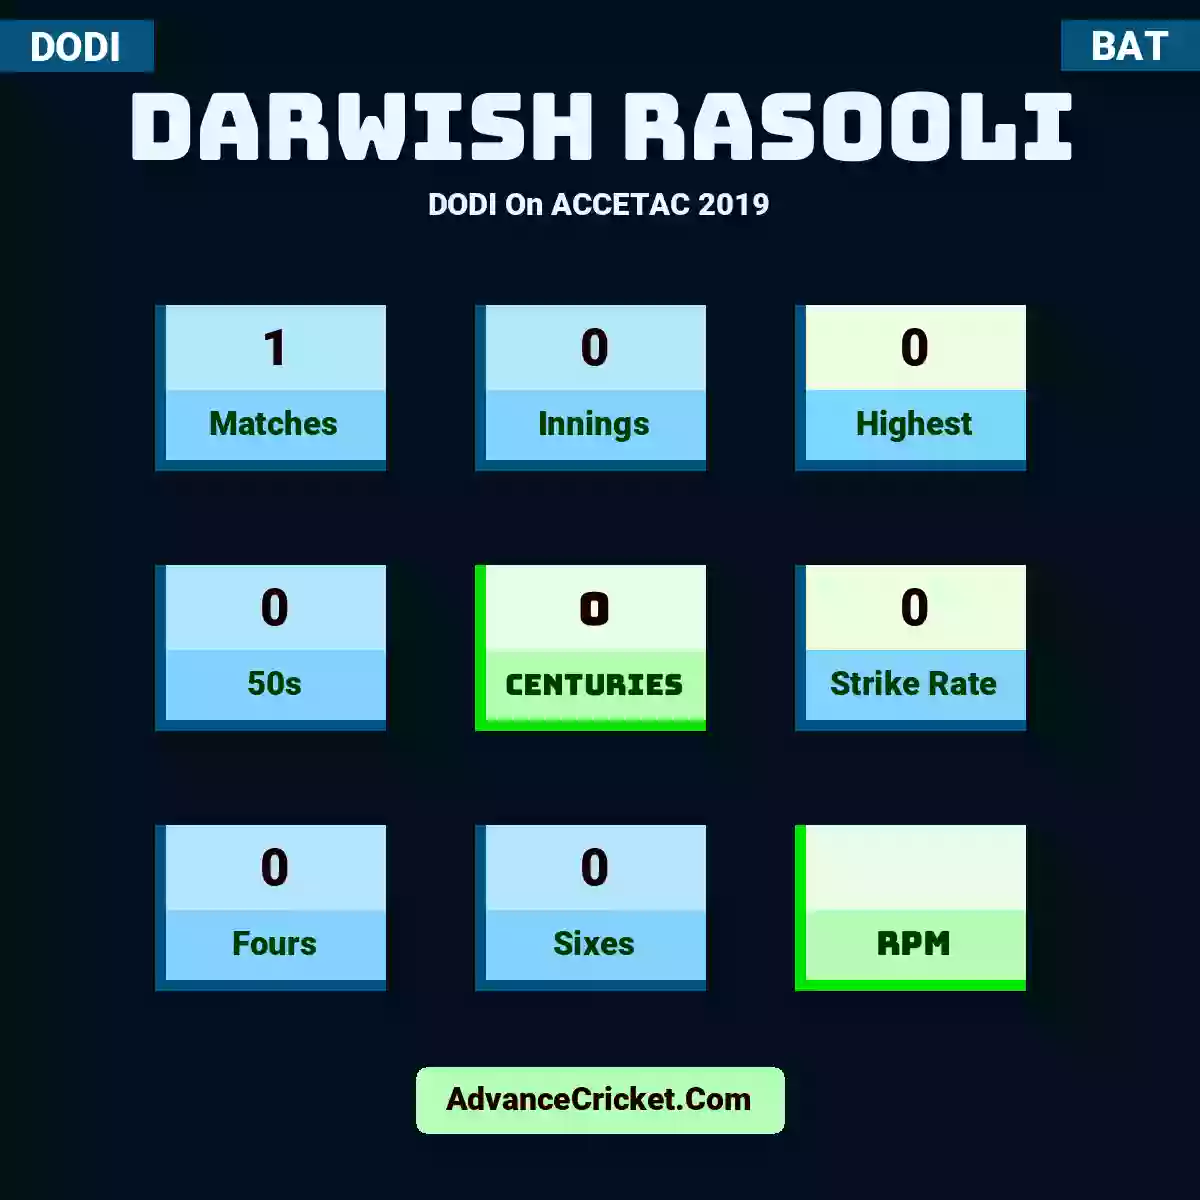 Darwish Rasooli DODI  On ACCETAC 2019, Darwish Rasooli played 1 matches, scored 0 runs as highest, 0 half-centuries, and 0 centuries, with a strike rate of 0. D.Rasooli hit 0 fours and 0 sixes.